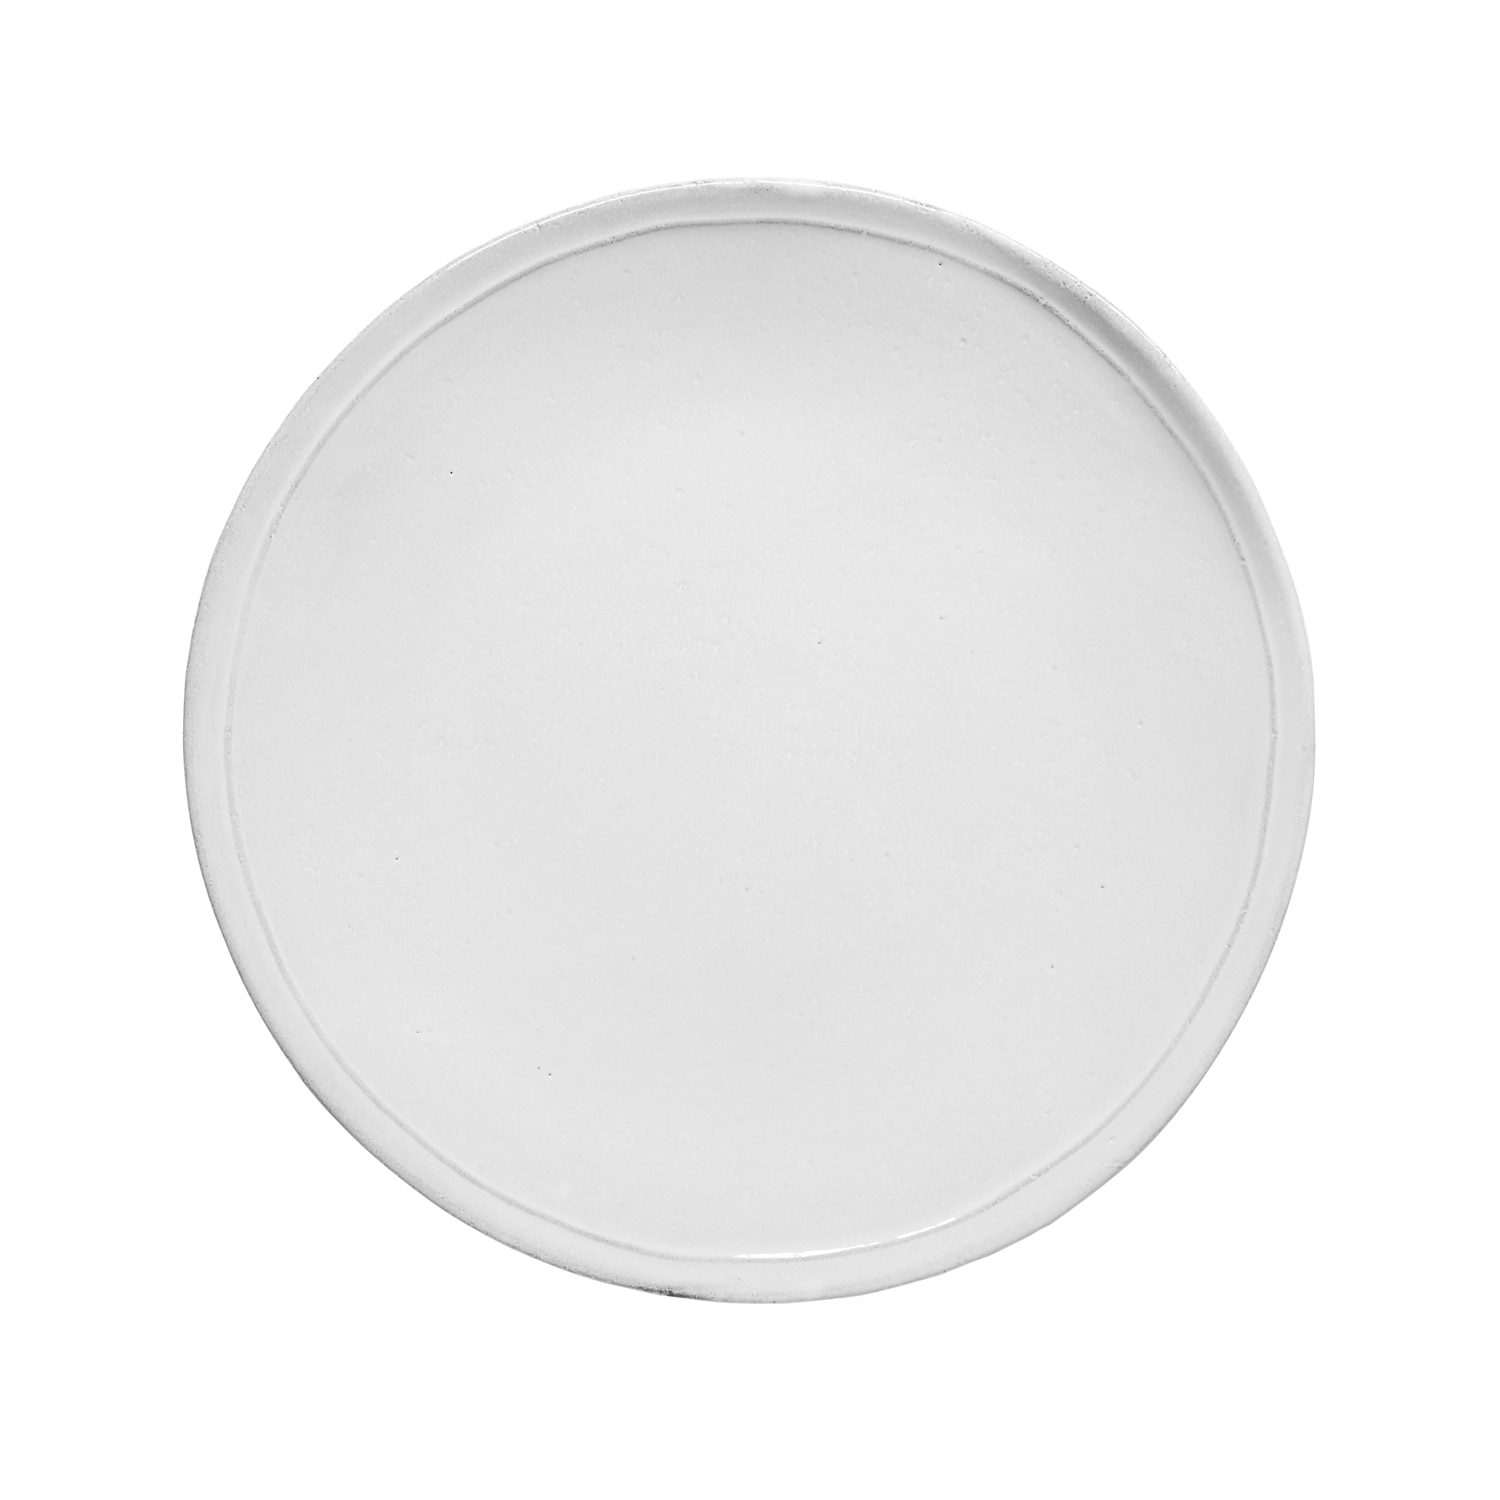 [Simple] Large Dinner Plate